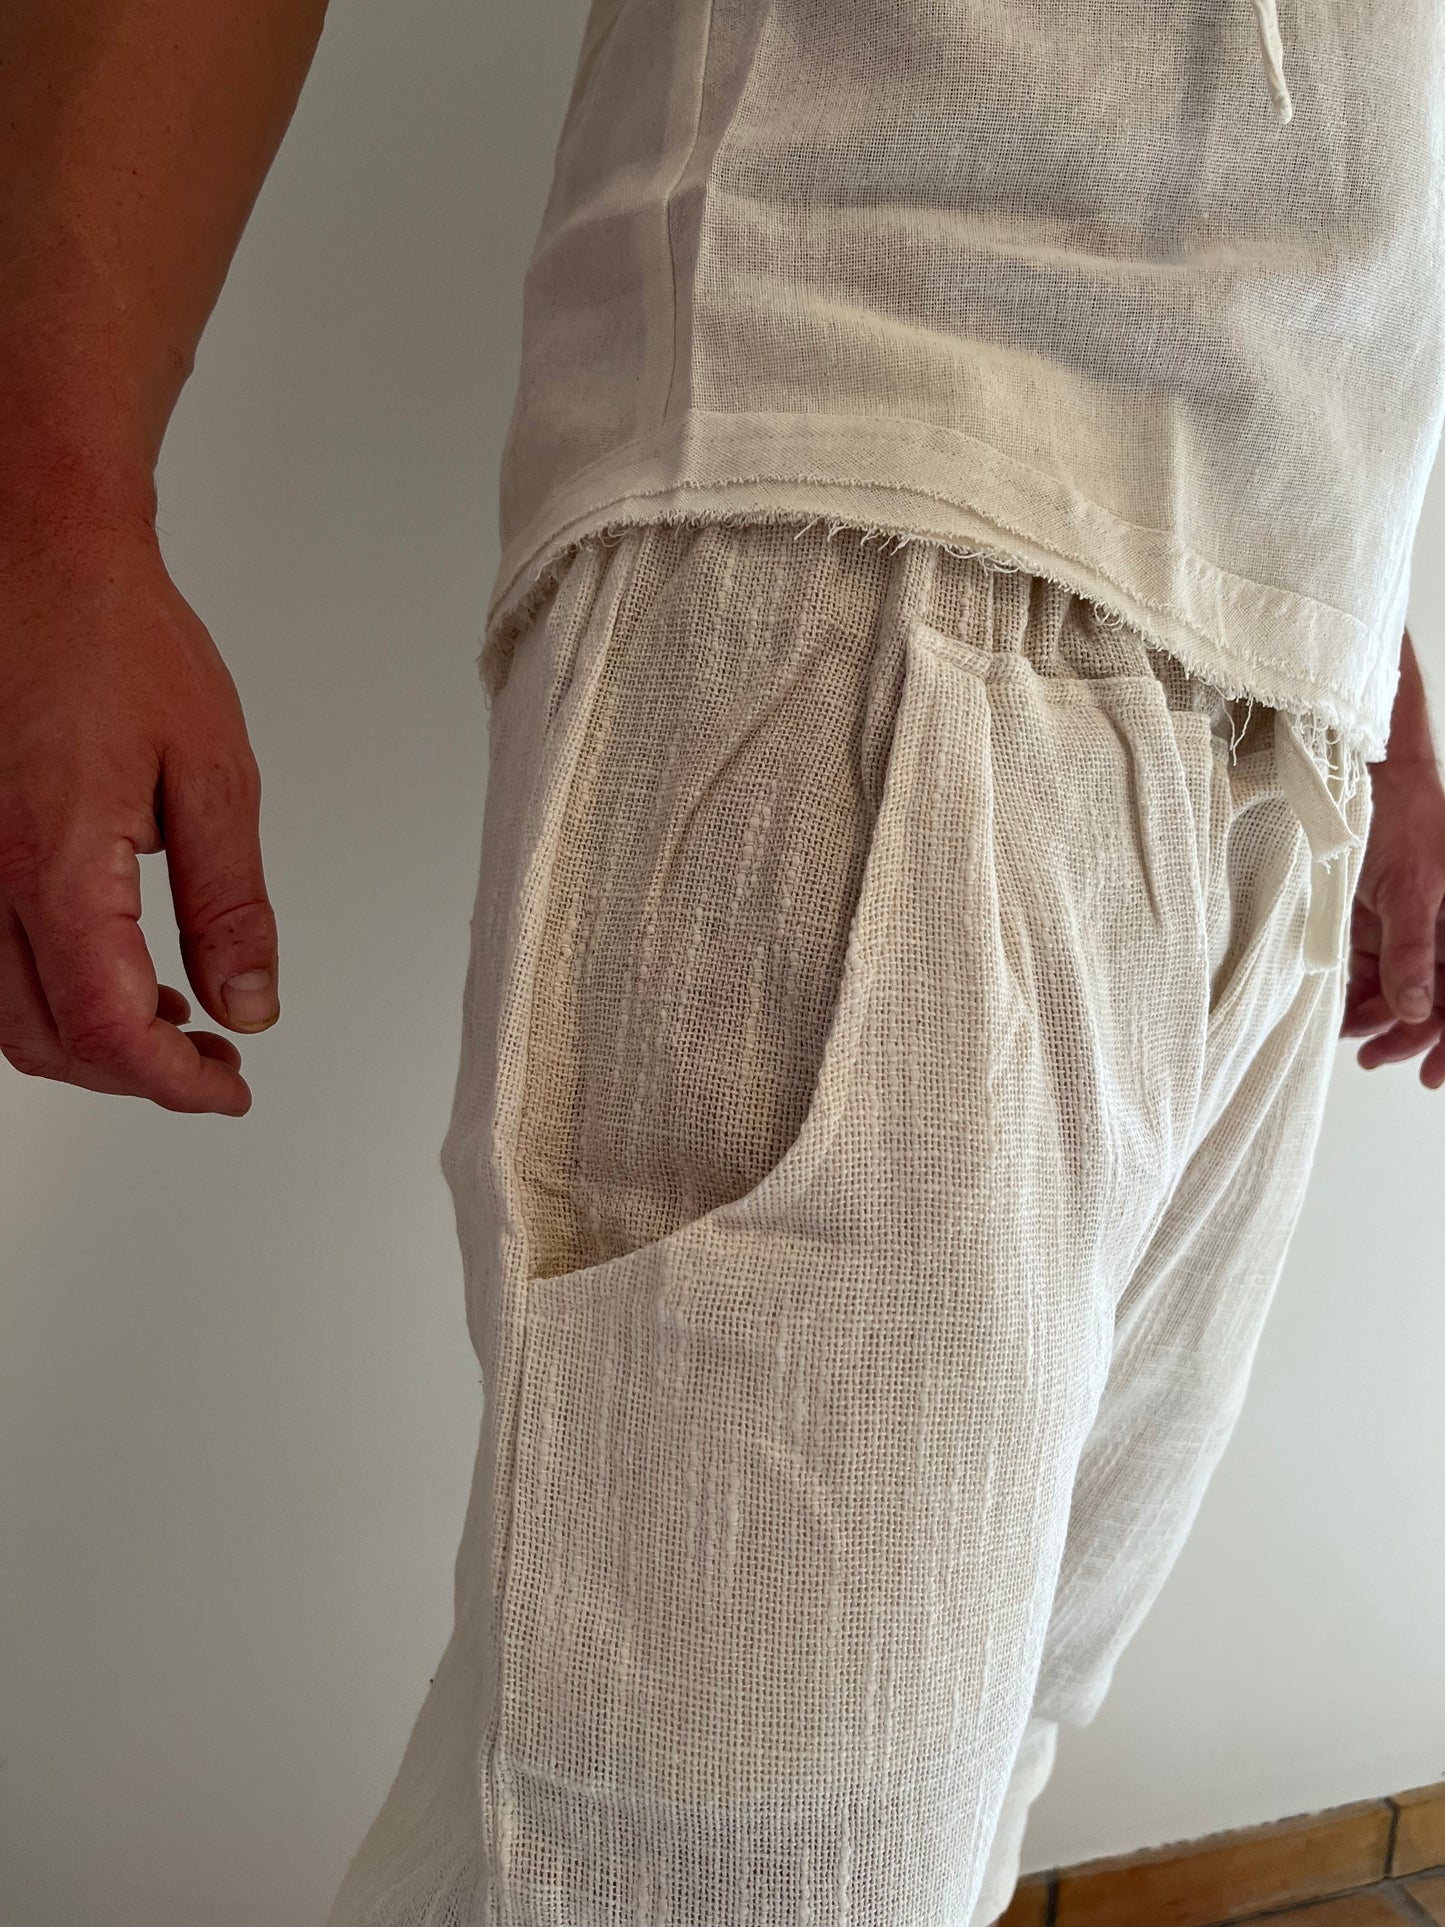 Bugla 3/4 raw cotton pants - ecru and beige